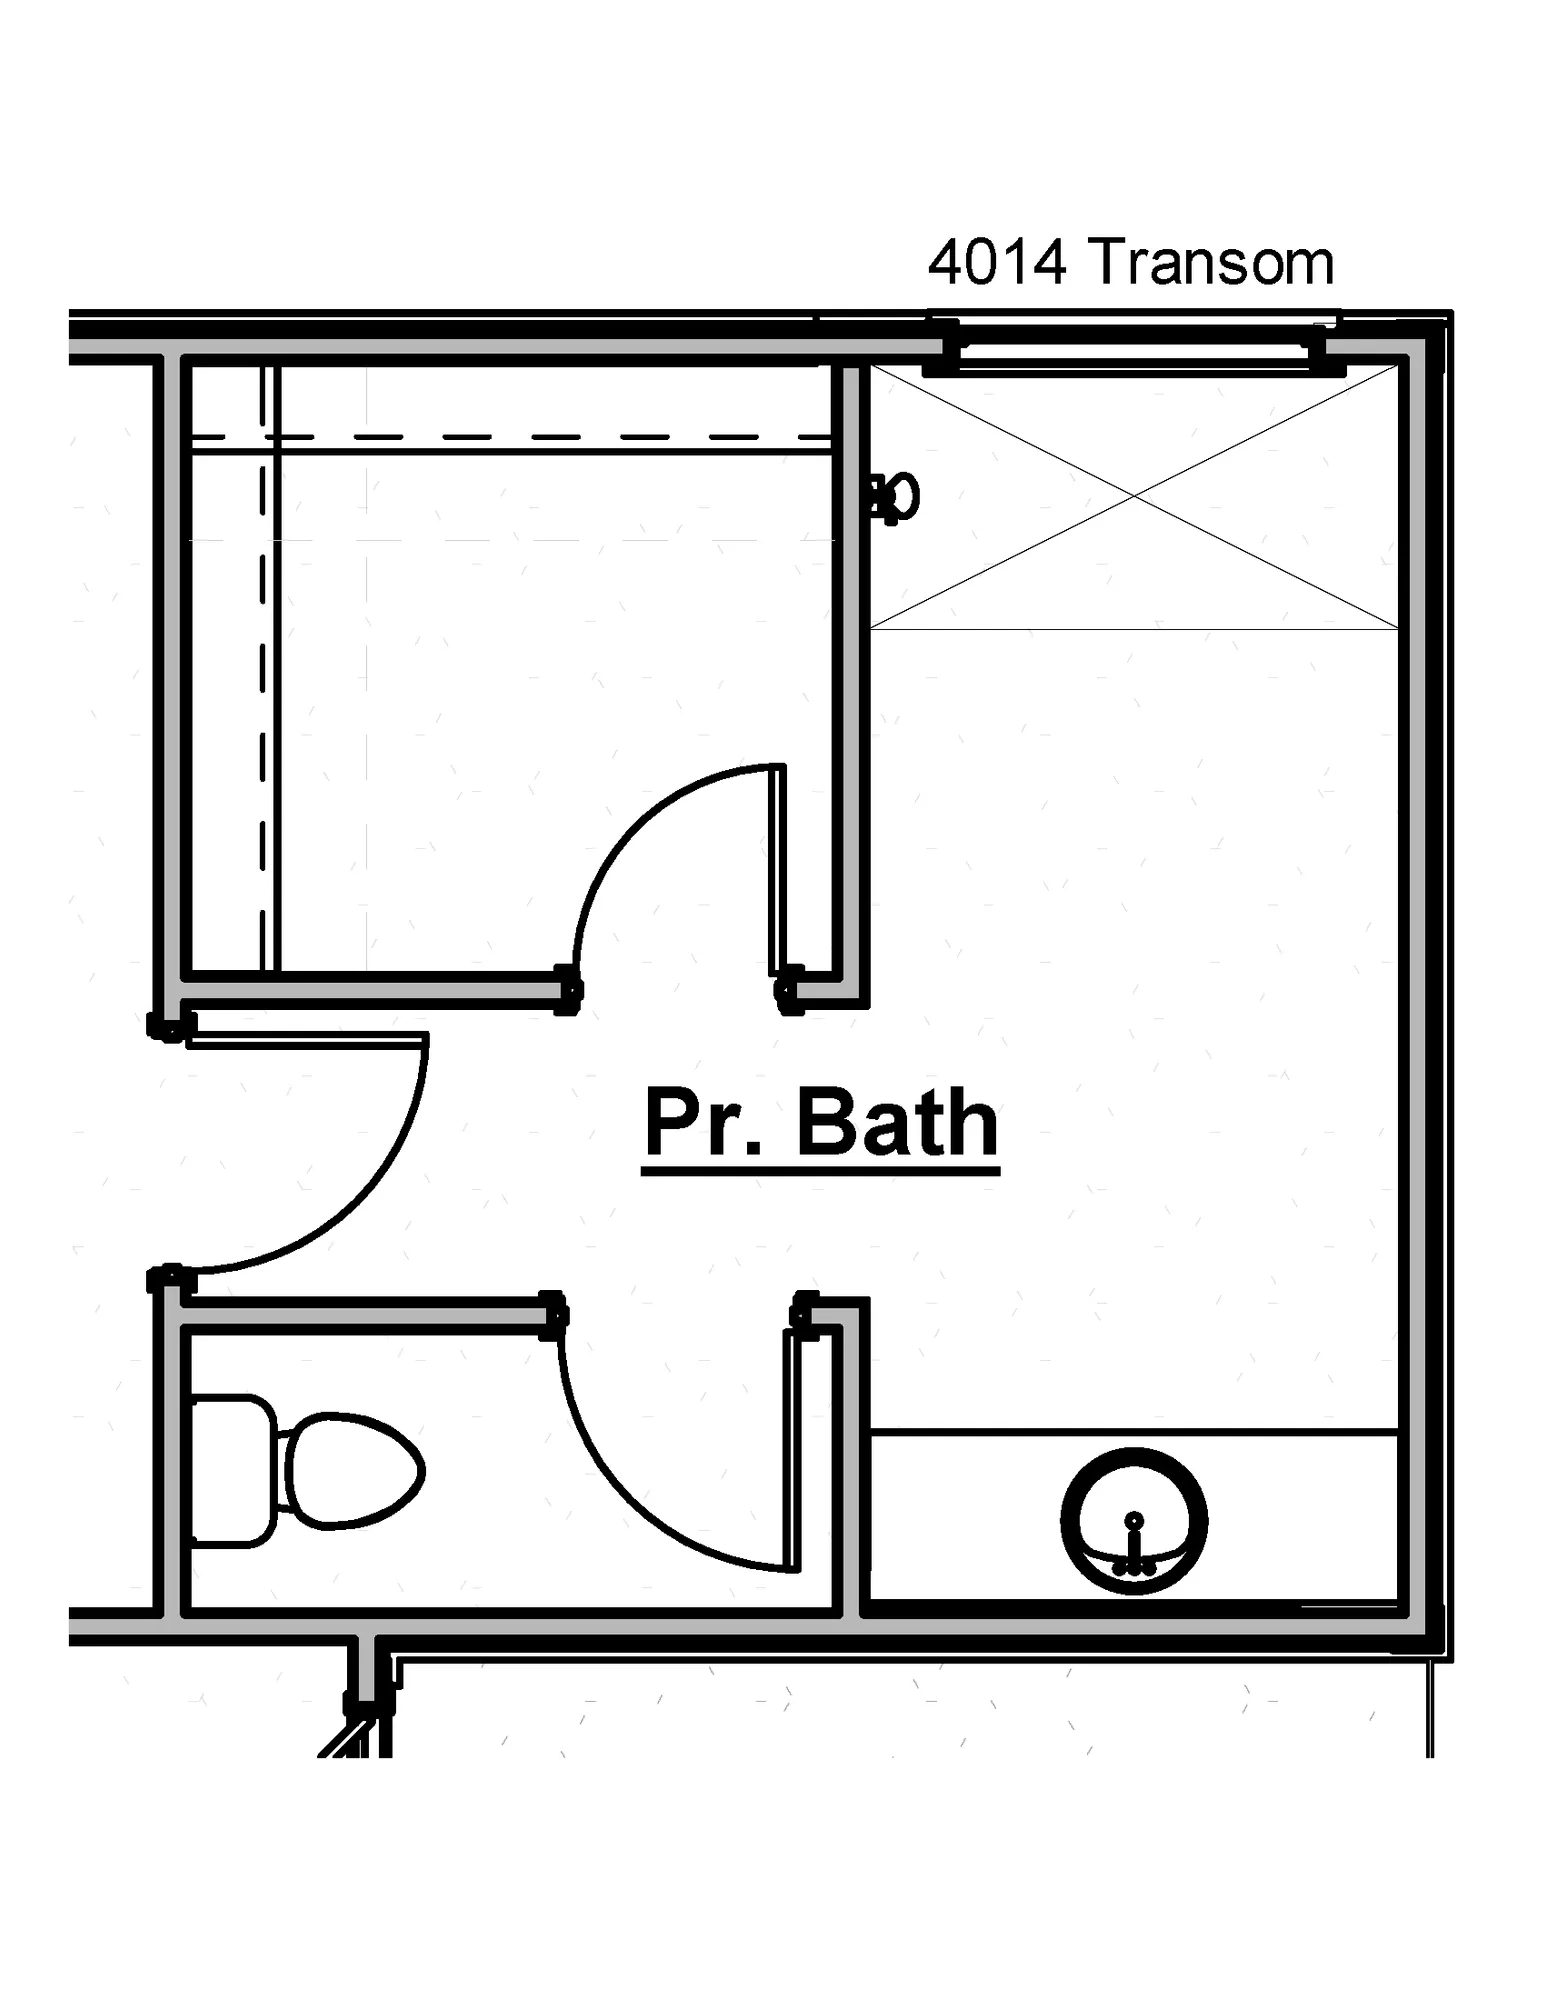 Primary Shower Transom Window - undefined